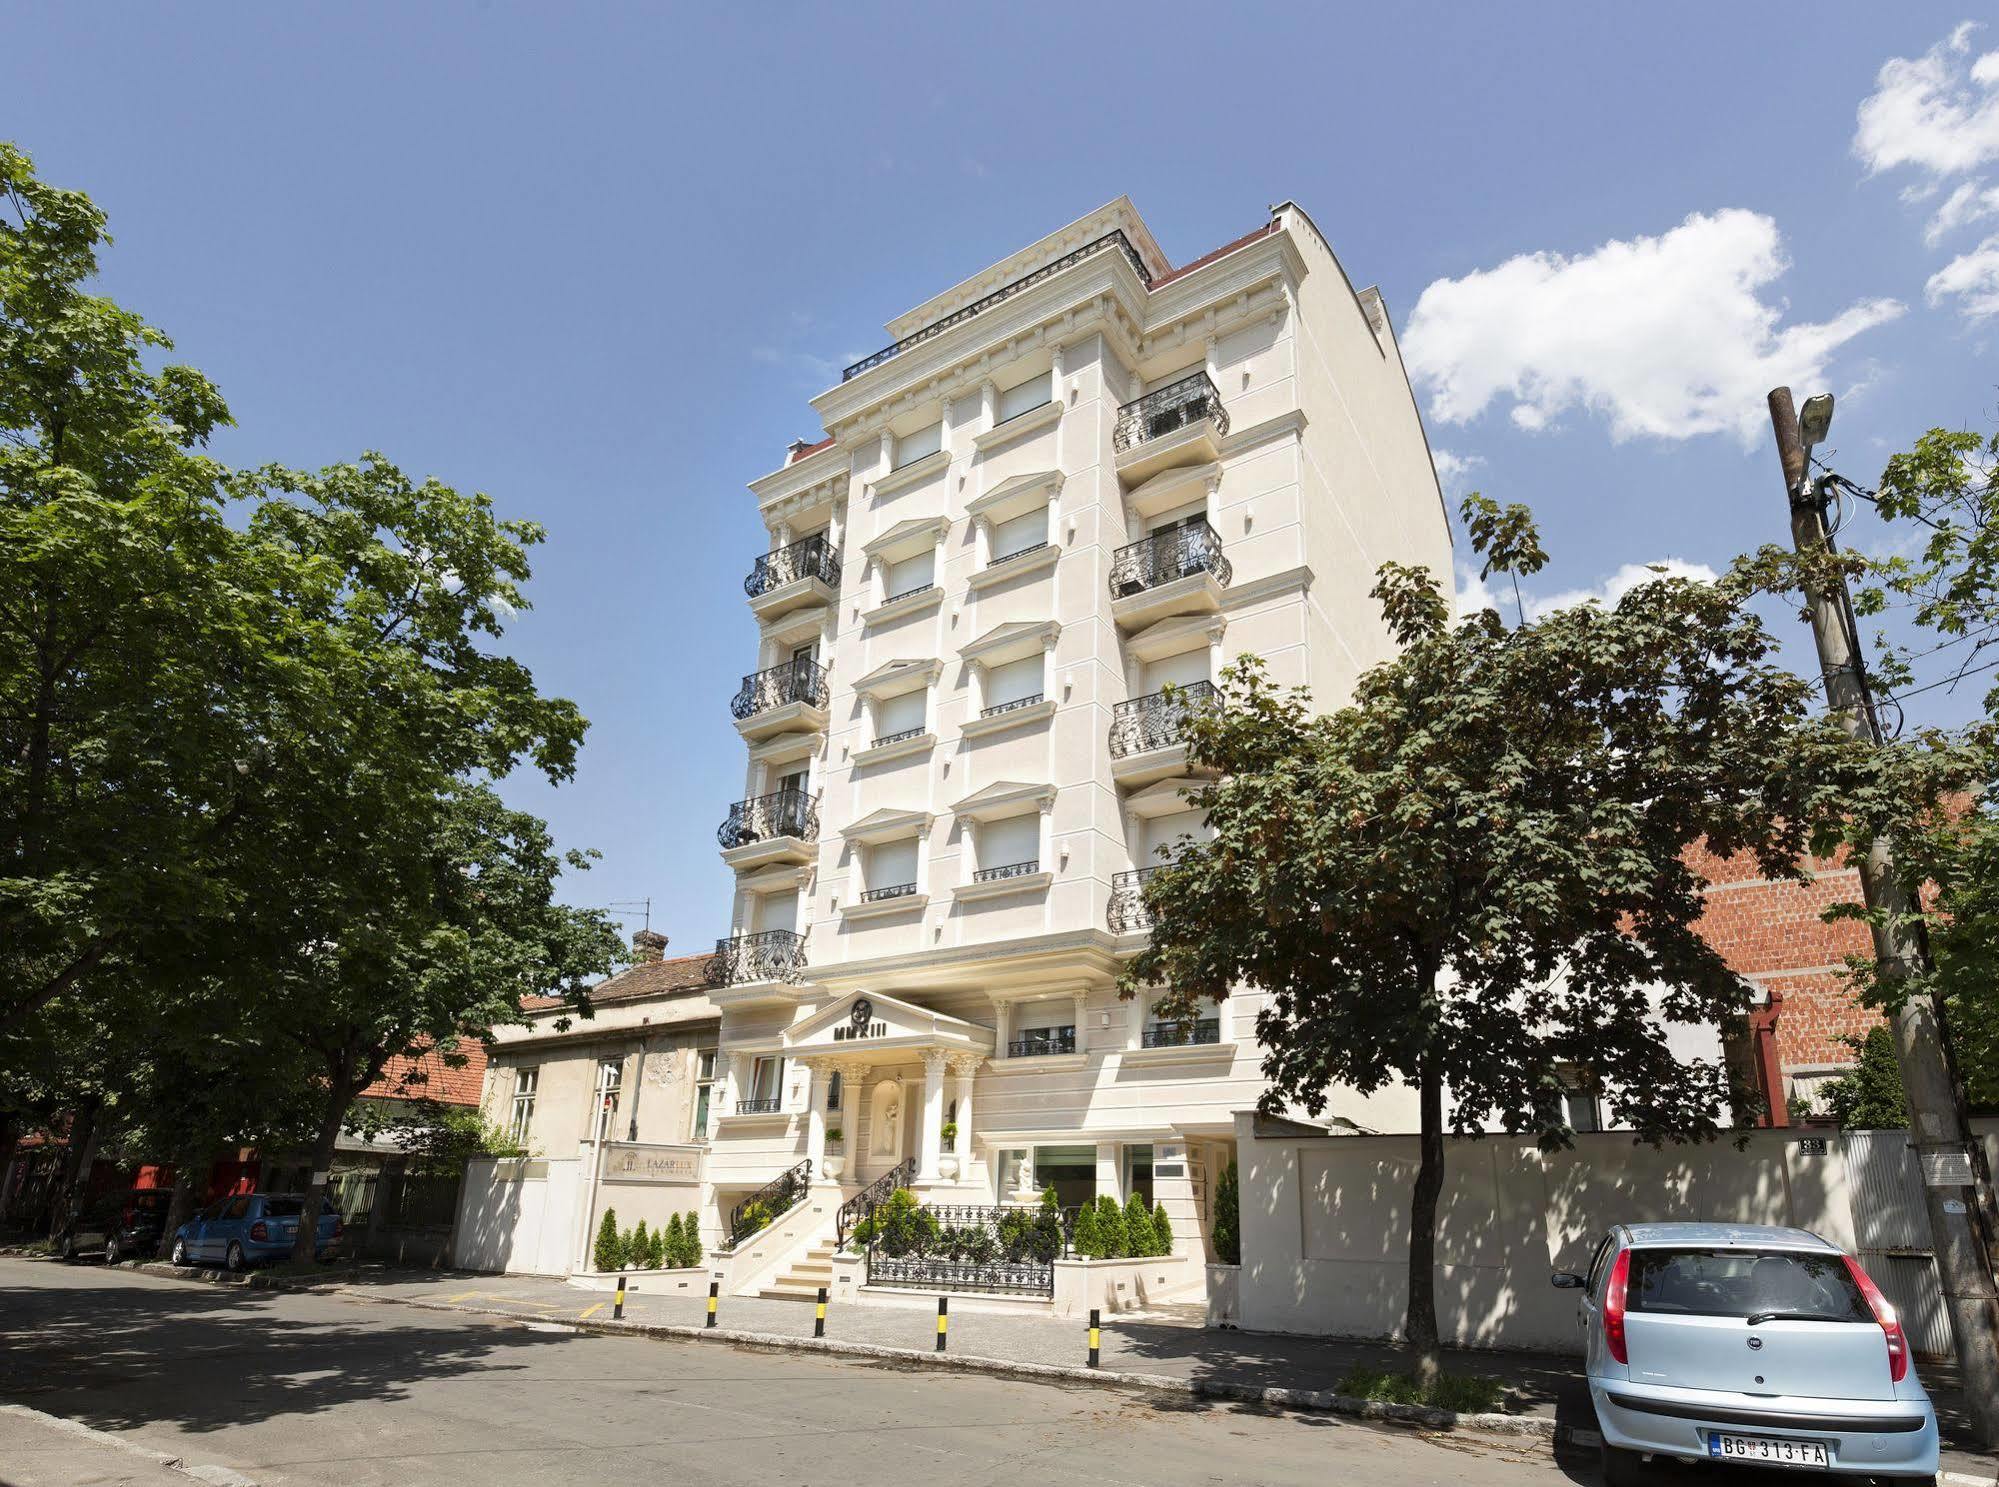 Lazar Lux Apartments Belgrado Buitenkant foto